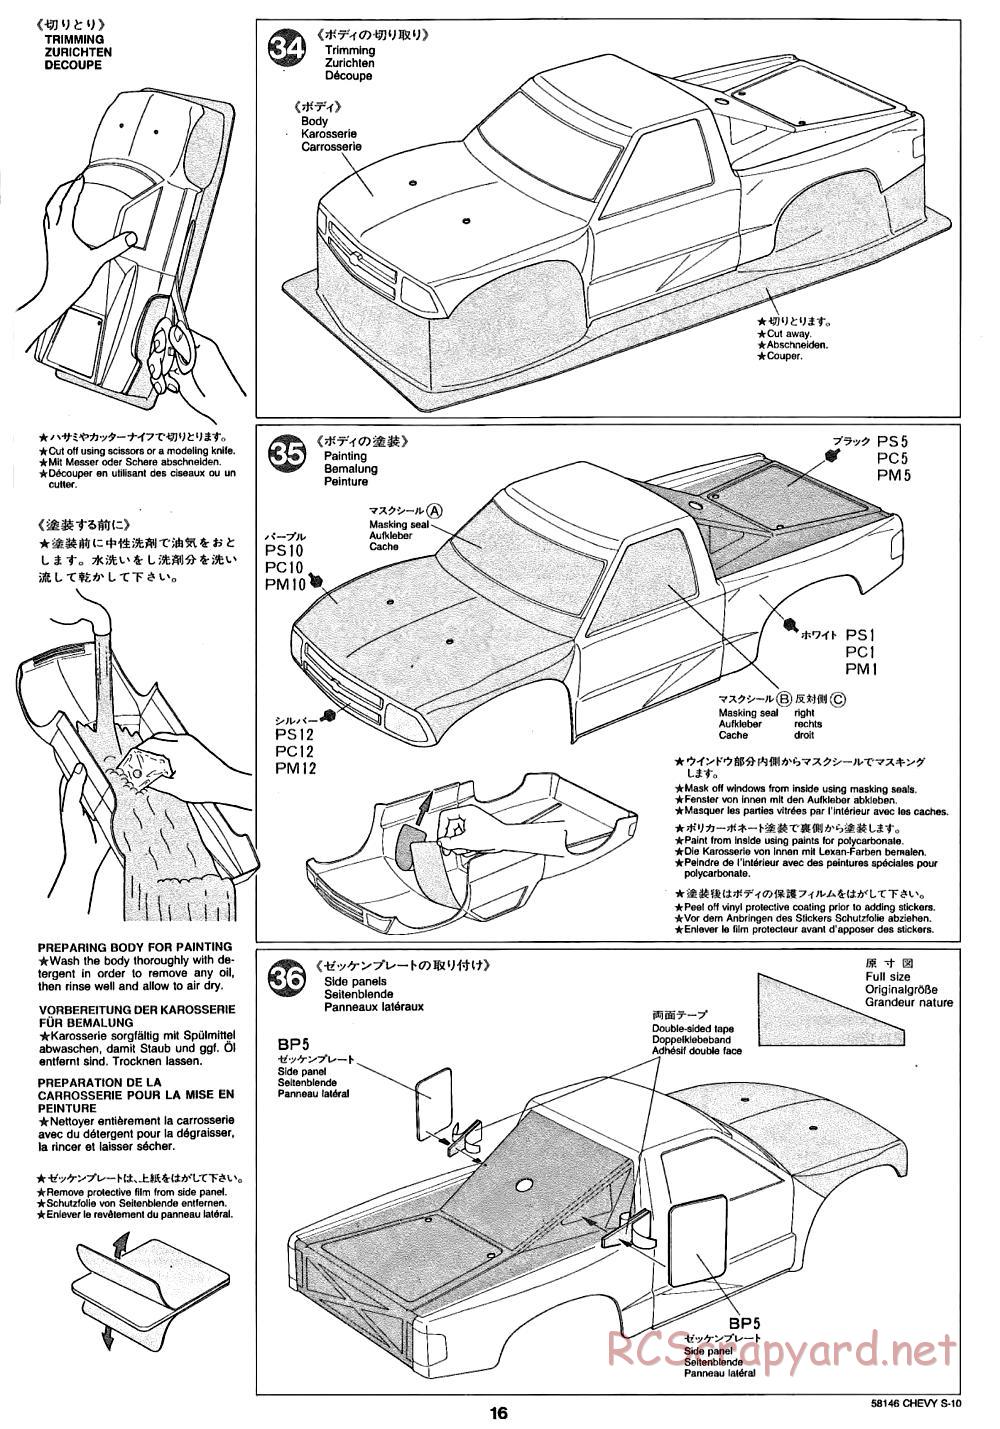 Tamiya - Chevy S-10 Chassis - Manual - Page 16